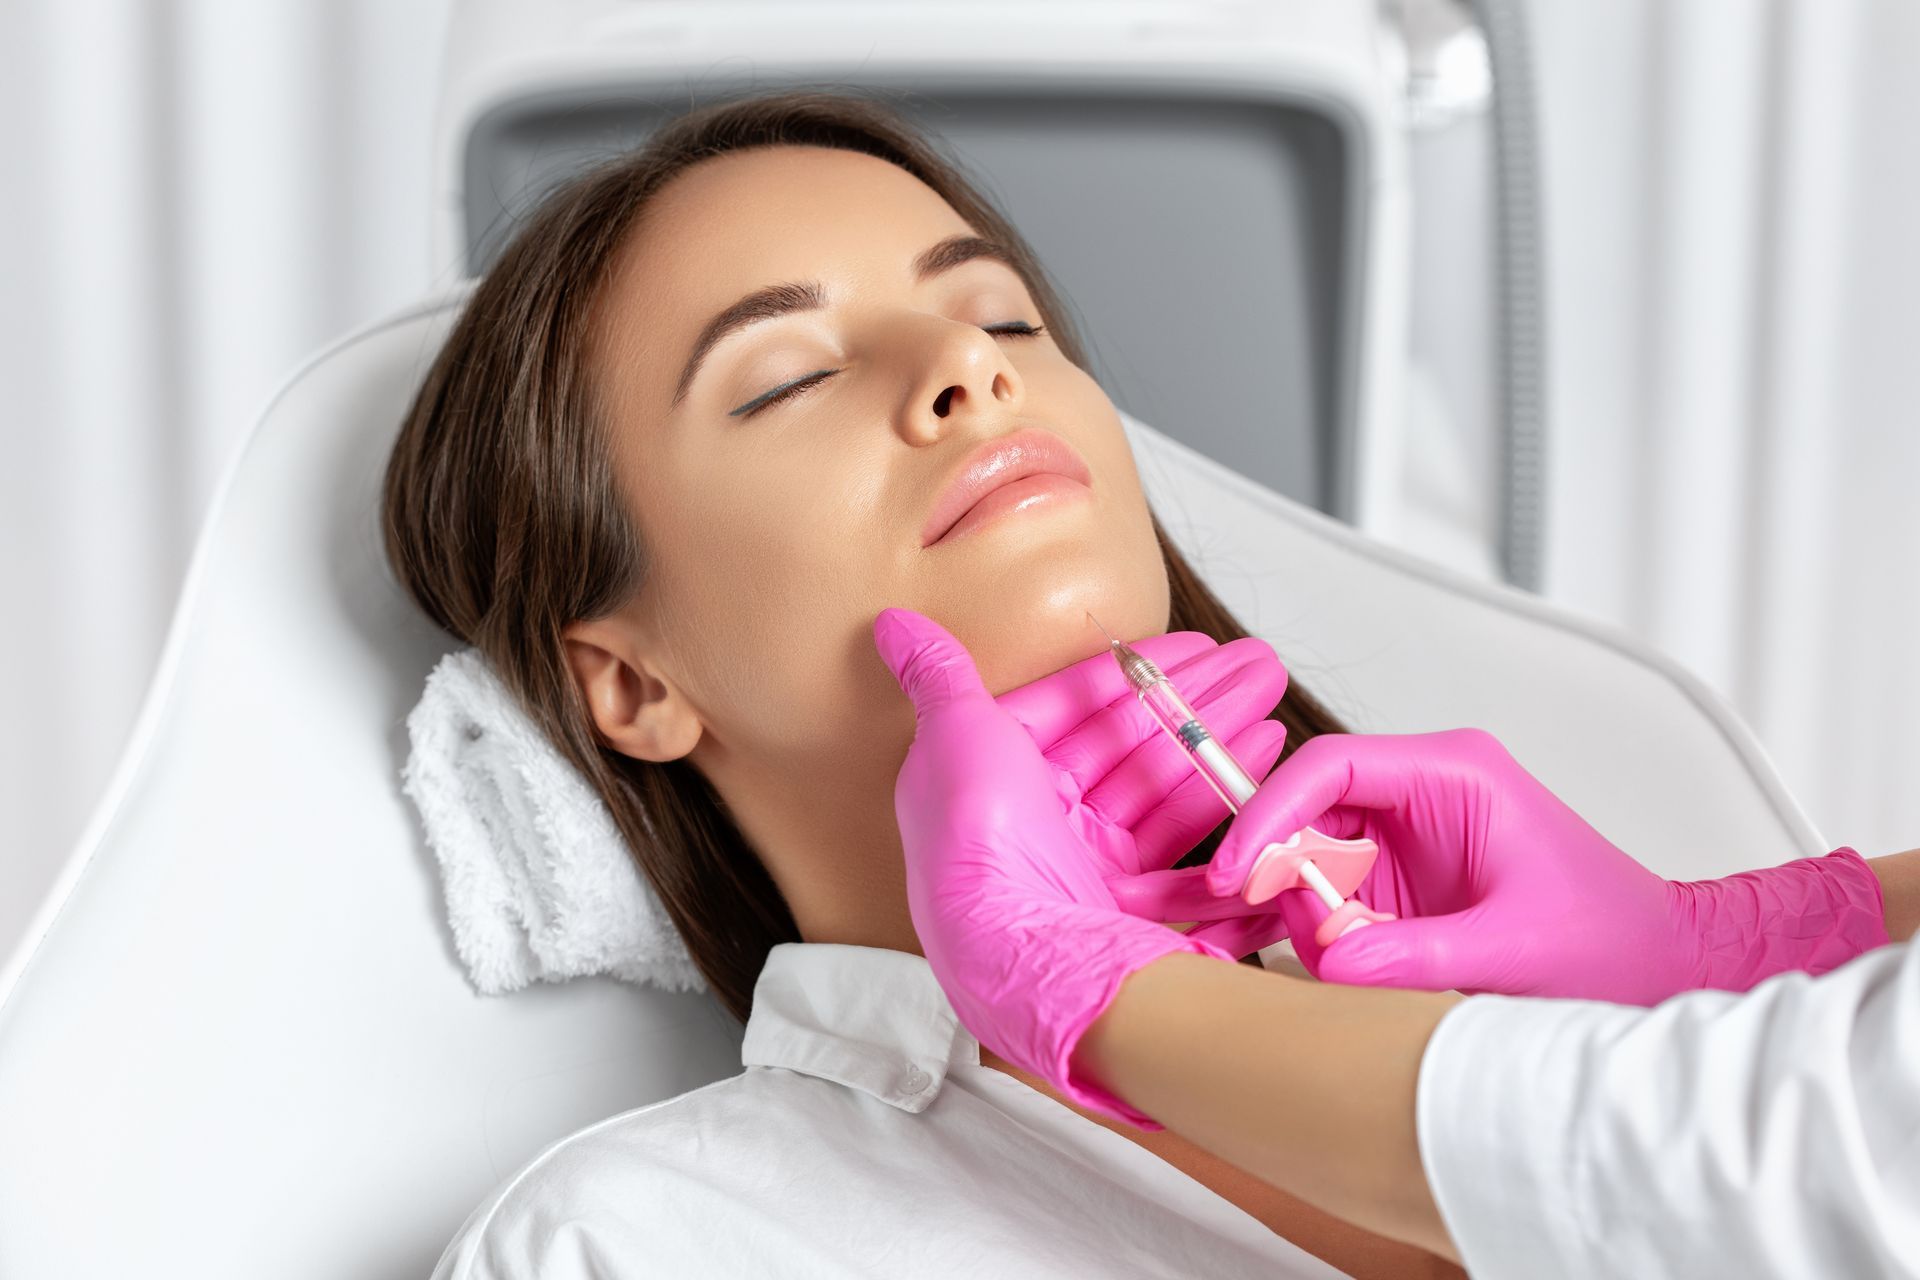 woman receives facial skin rejuvenation treatment